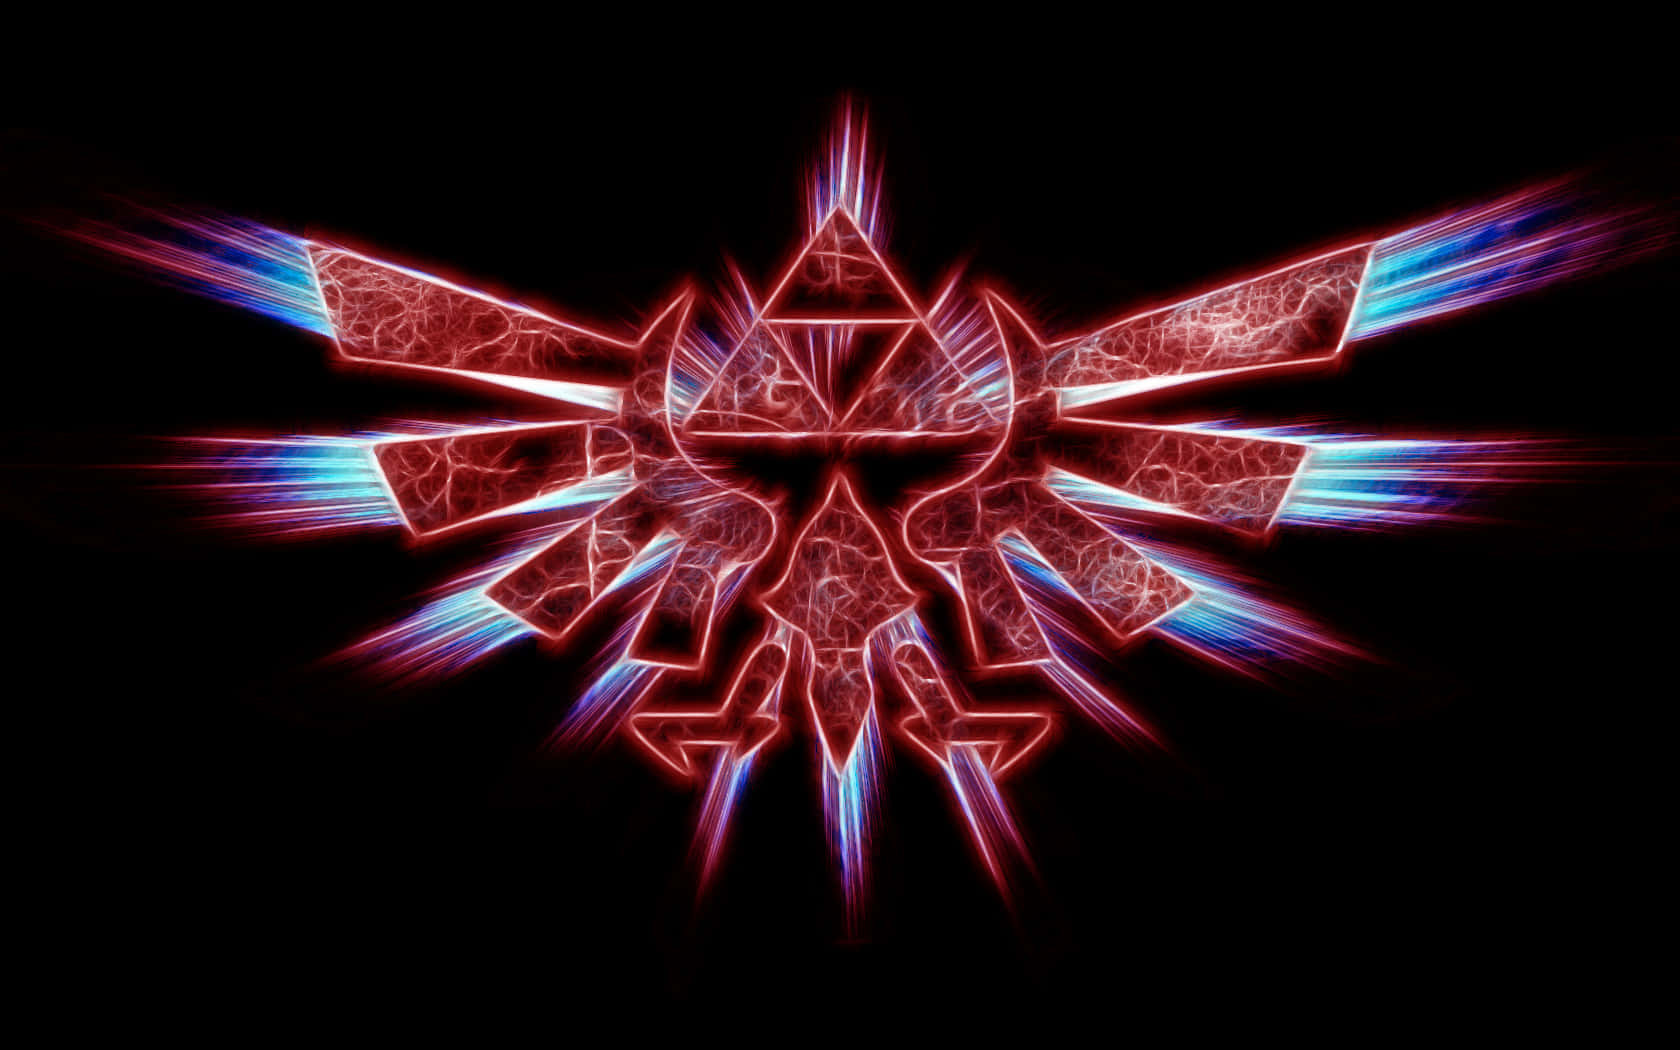 Detlegendariska Triforce-symbolet. Wallpaper